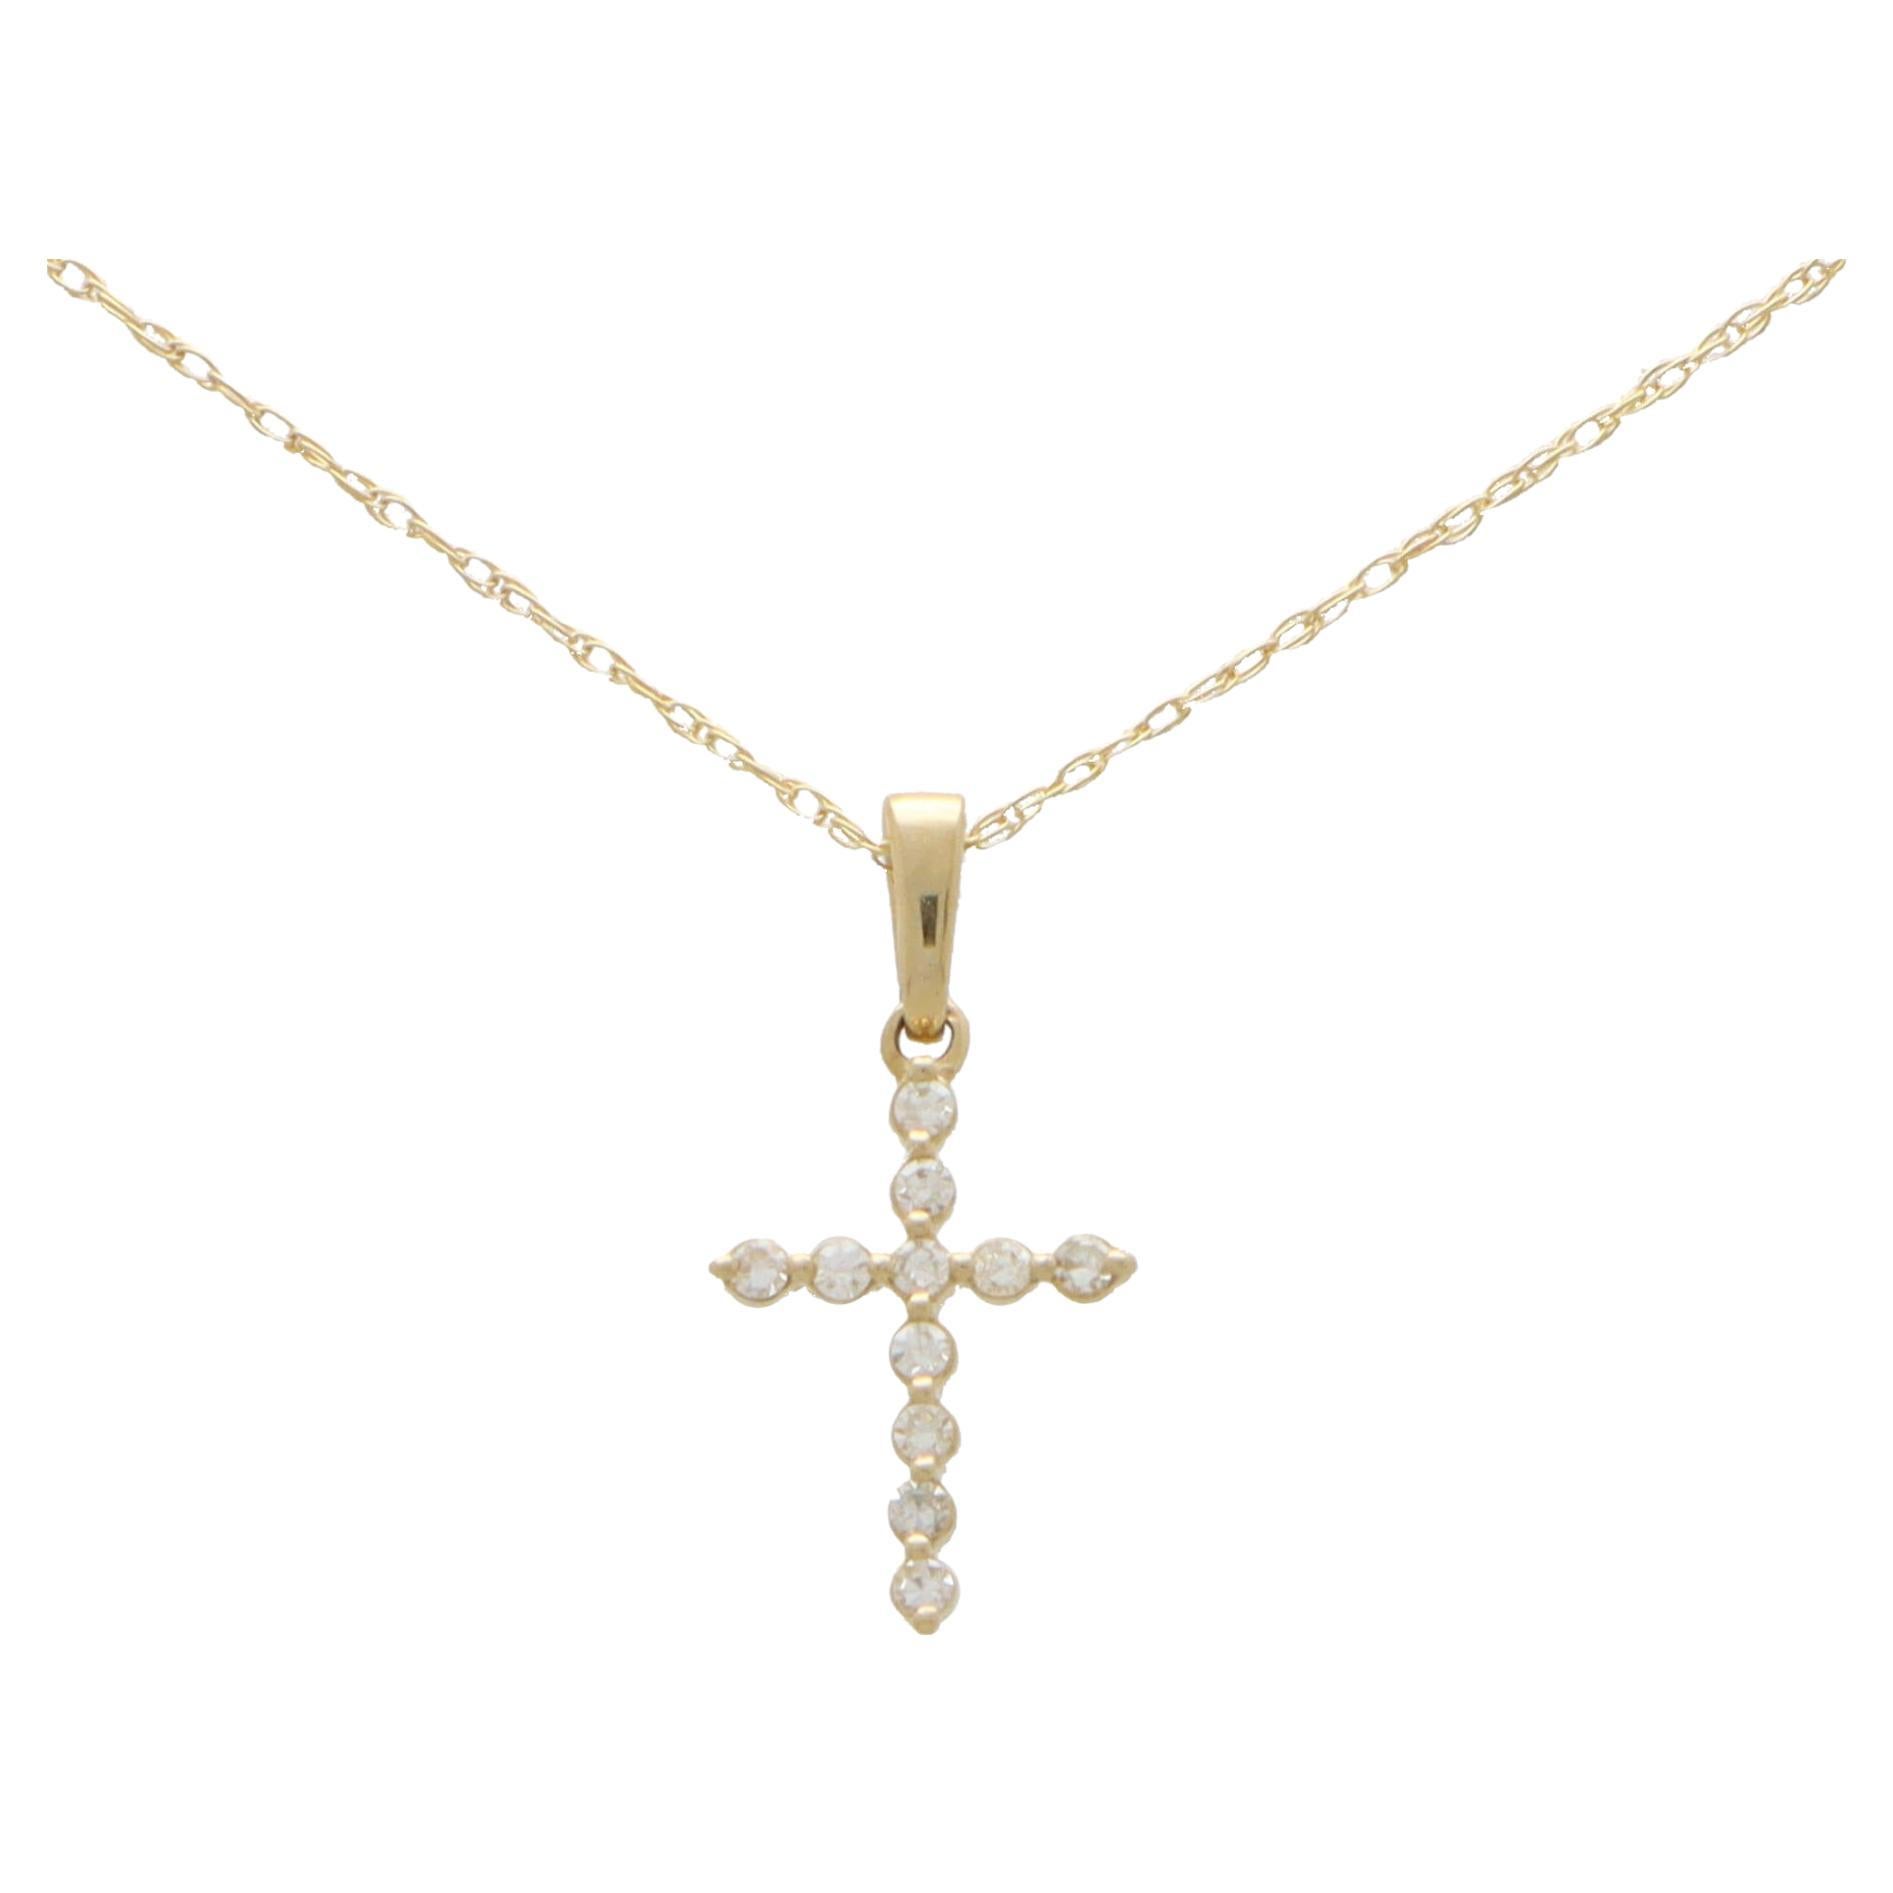  Pendentif croix serti de diamants en or jaune 14 carats